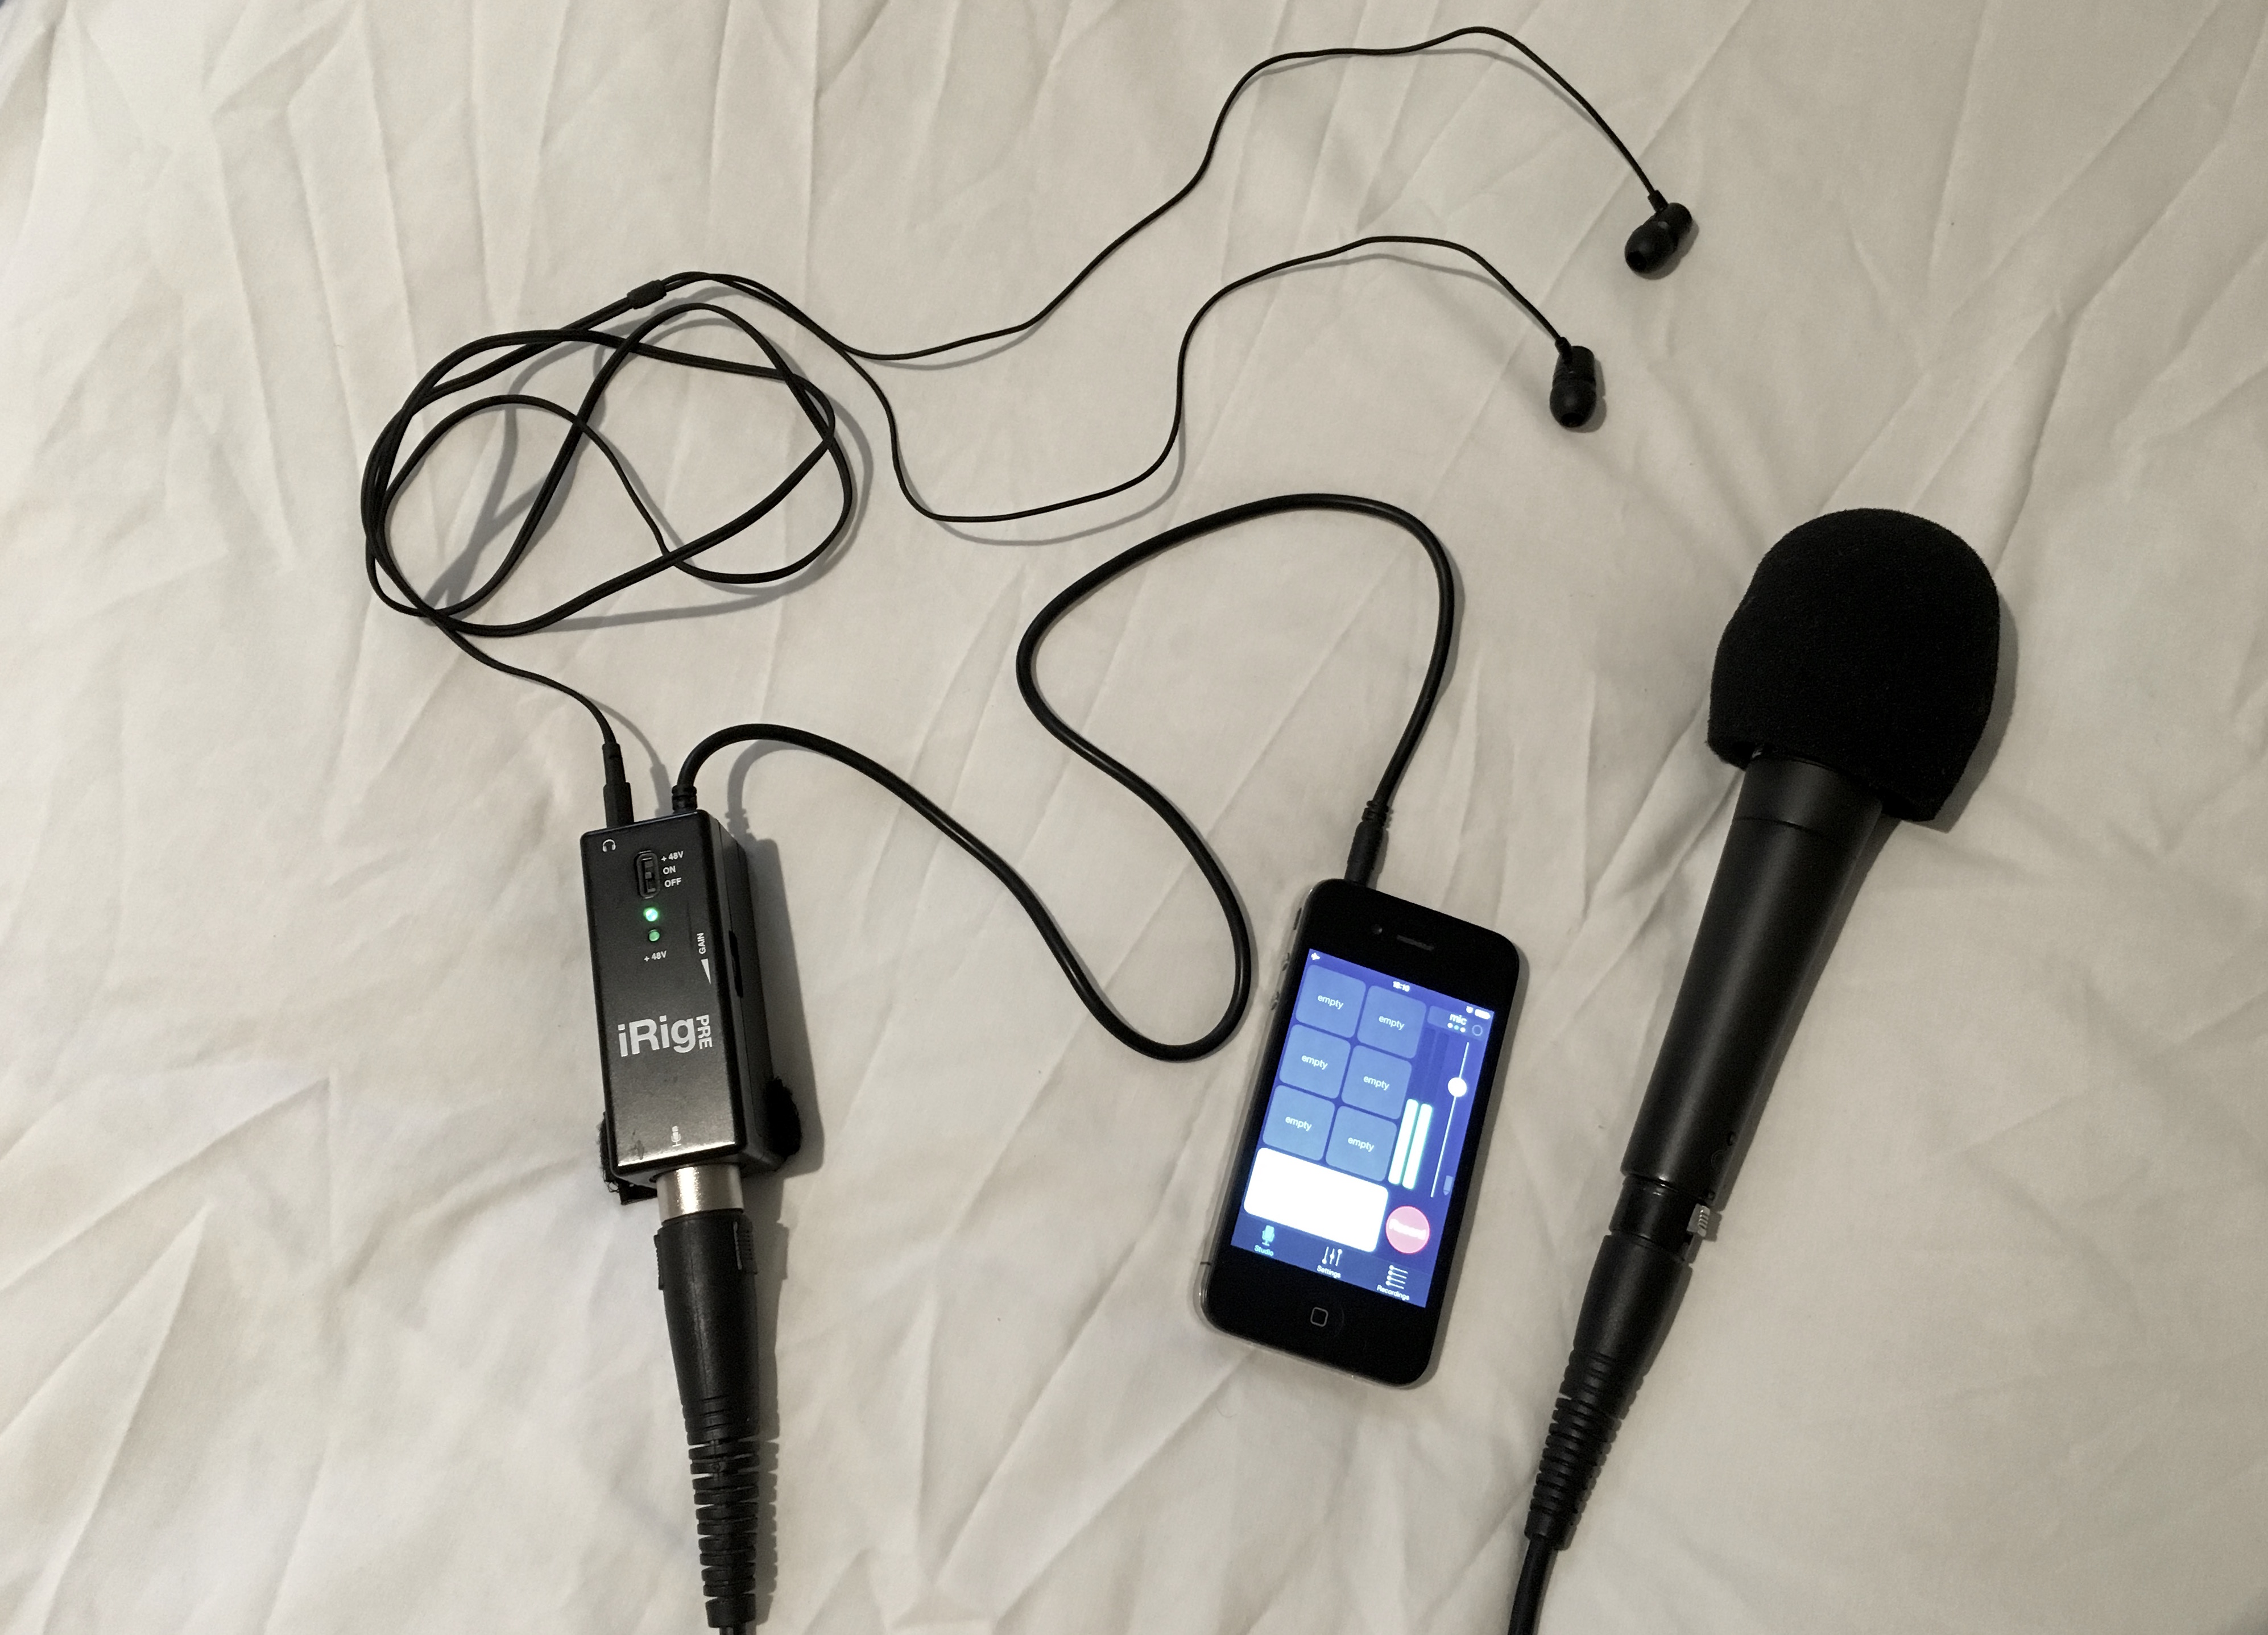 My portable recording setup: iPhone 4 + Bossjock Studio + iRigPre + Shure SM58